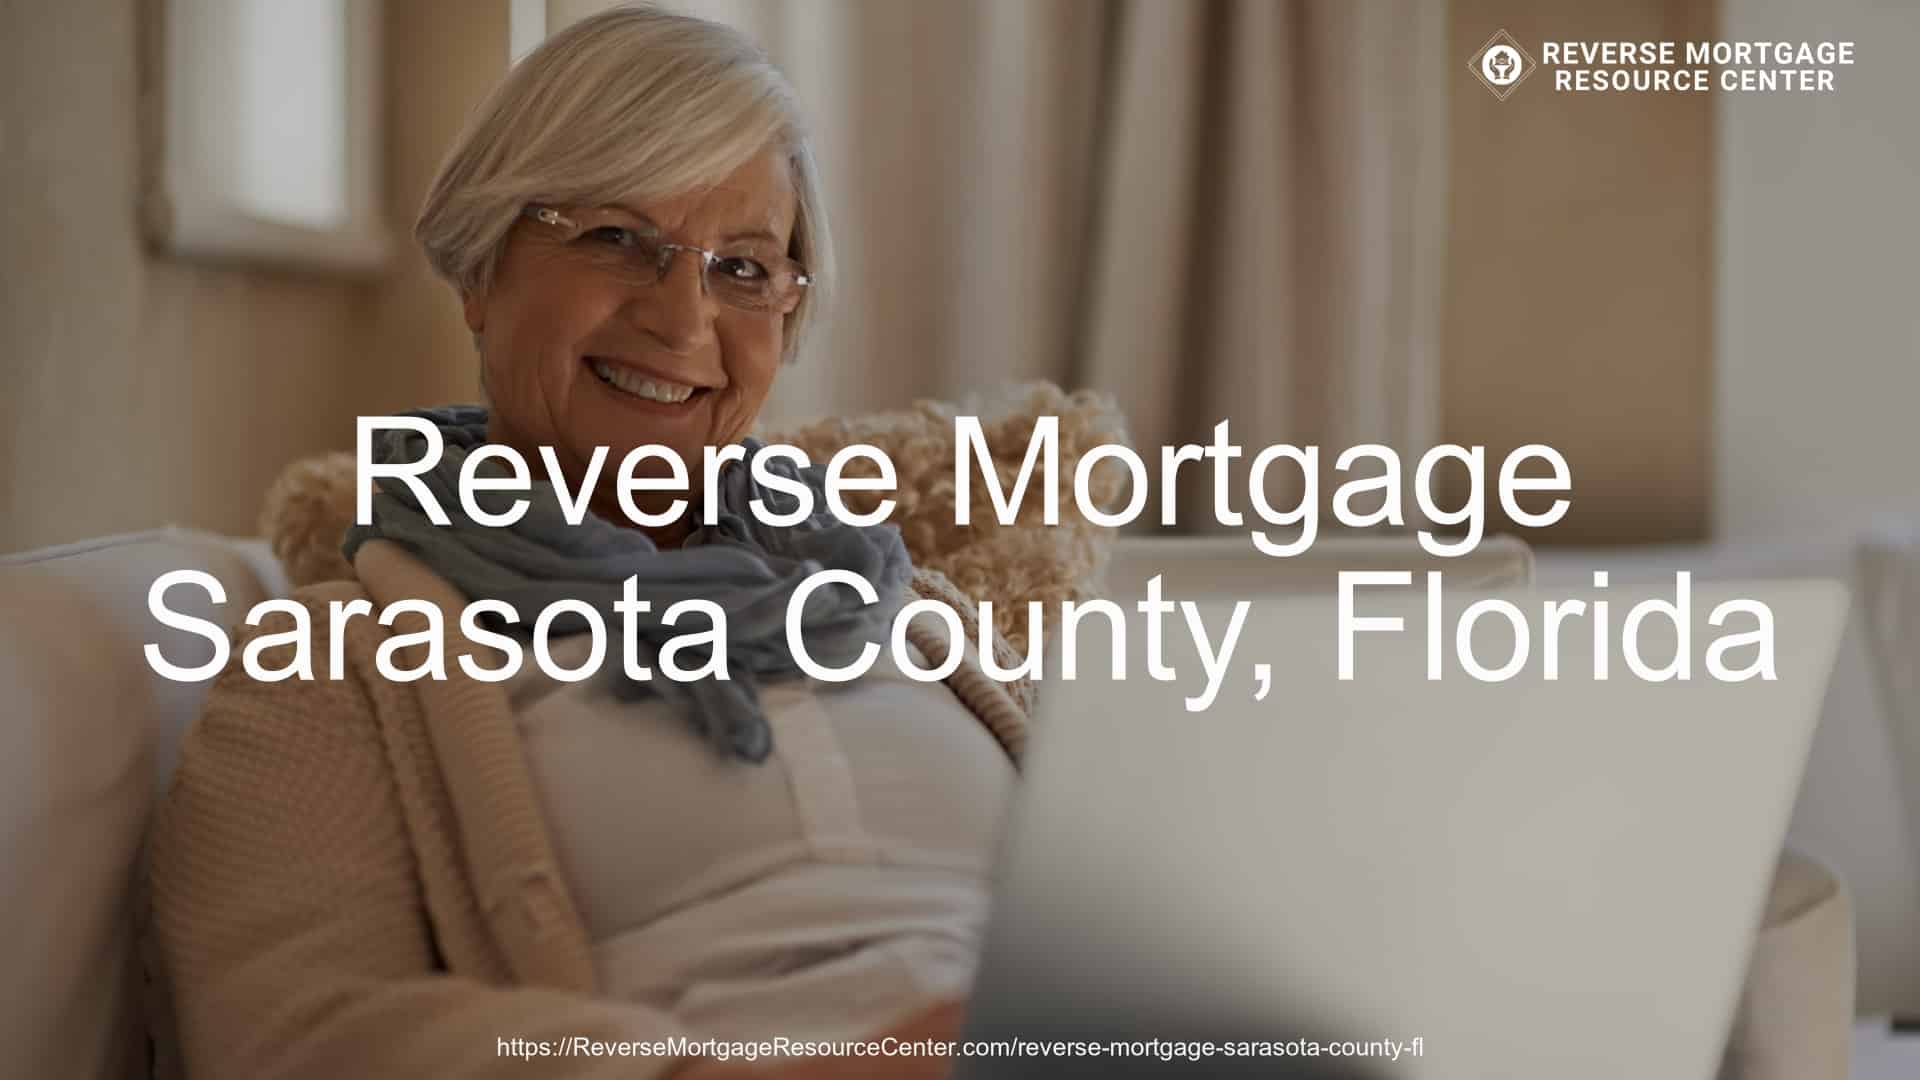 Reverse Mortgage Loans in Sarasota County Florida